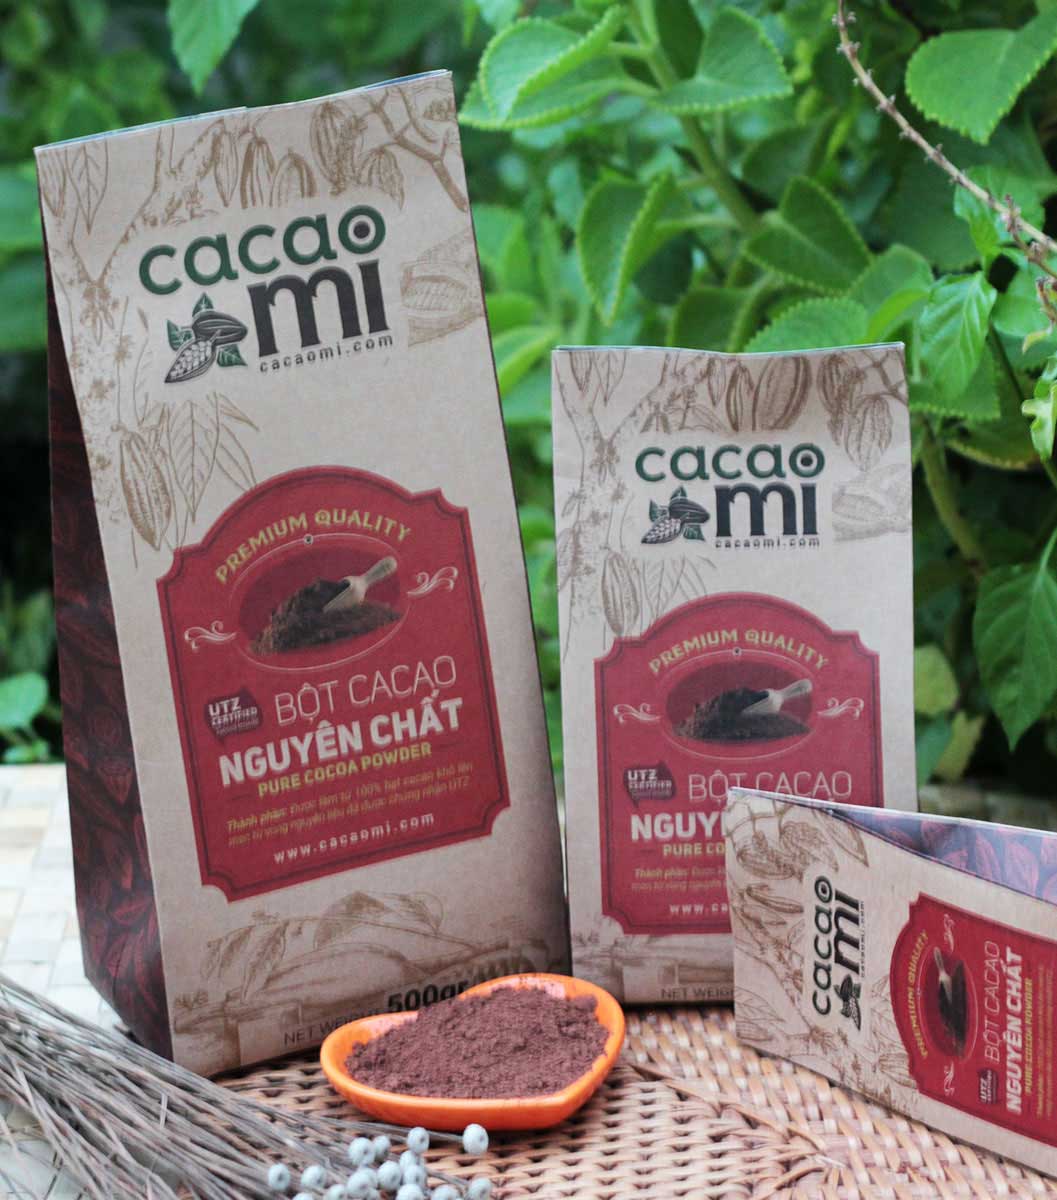 Cacaohanoi.com cam kết chỉ bán bột cacao nguyên chất 100%